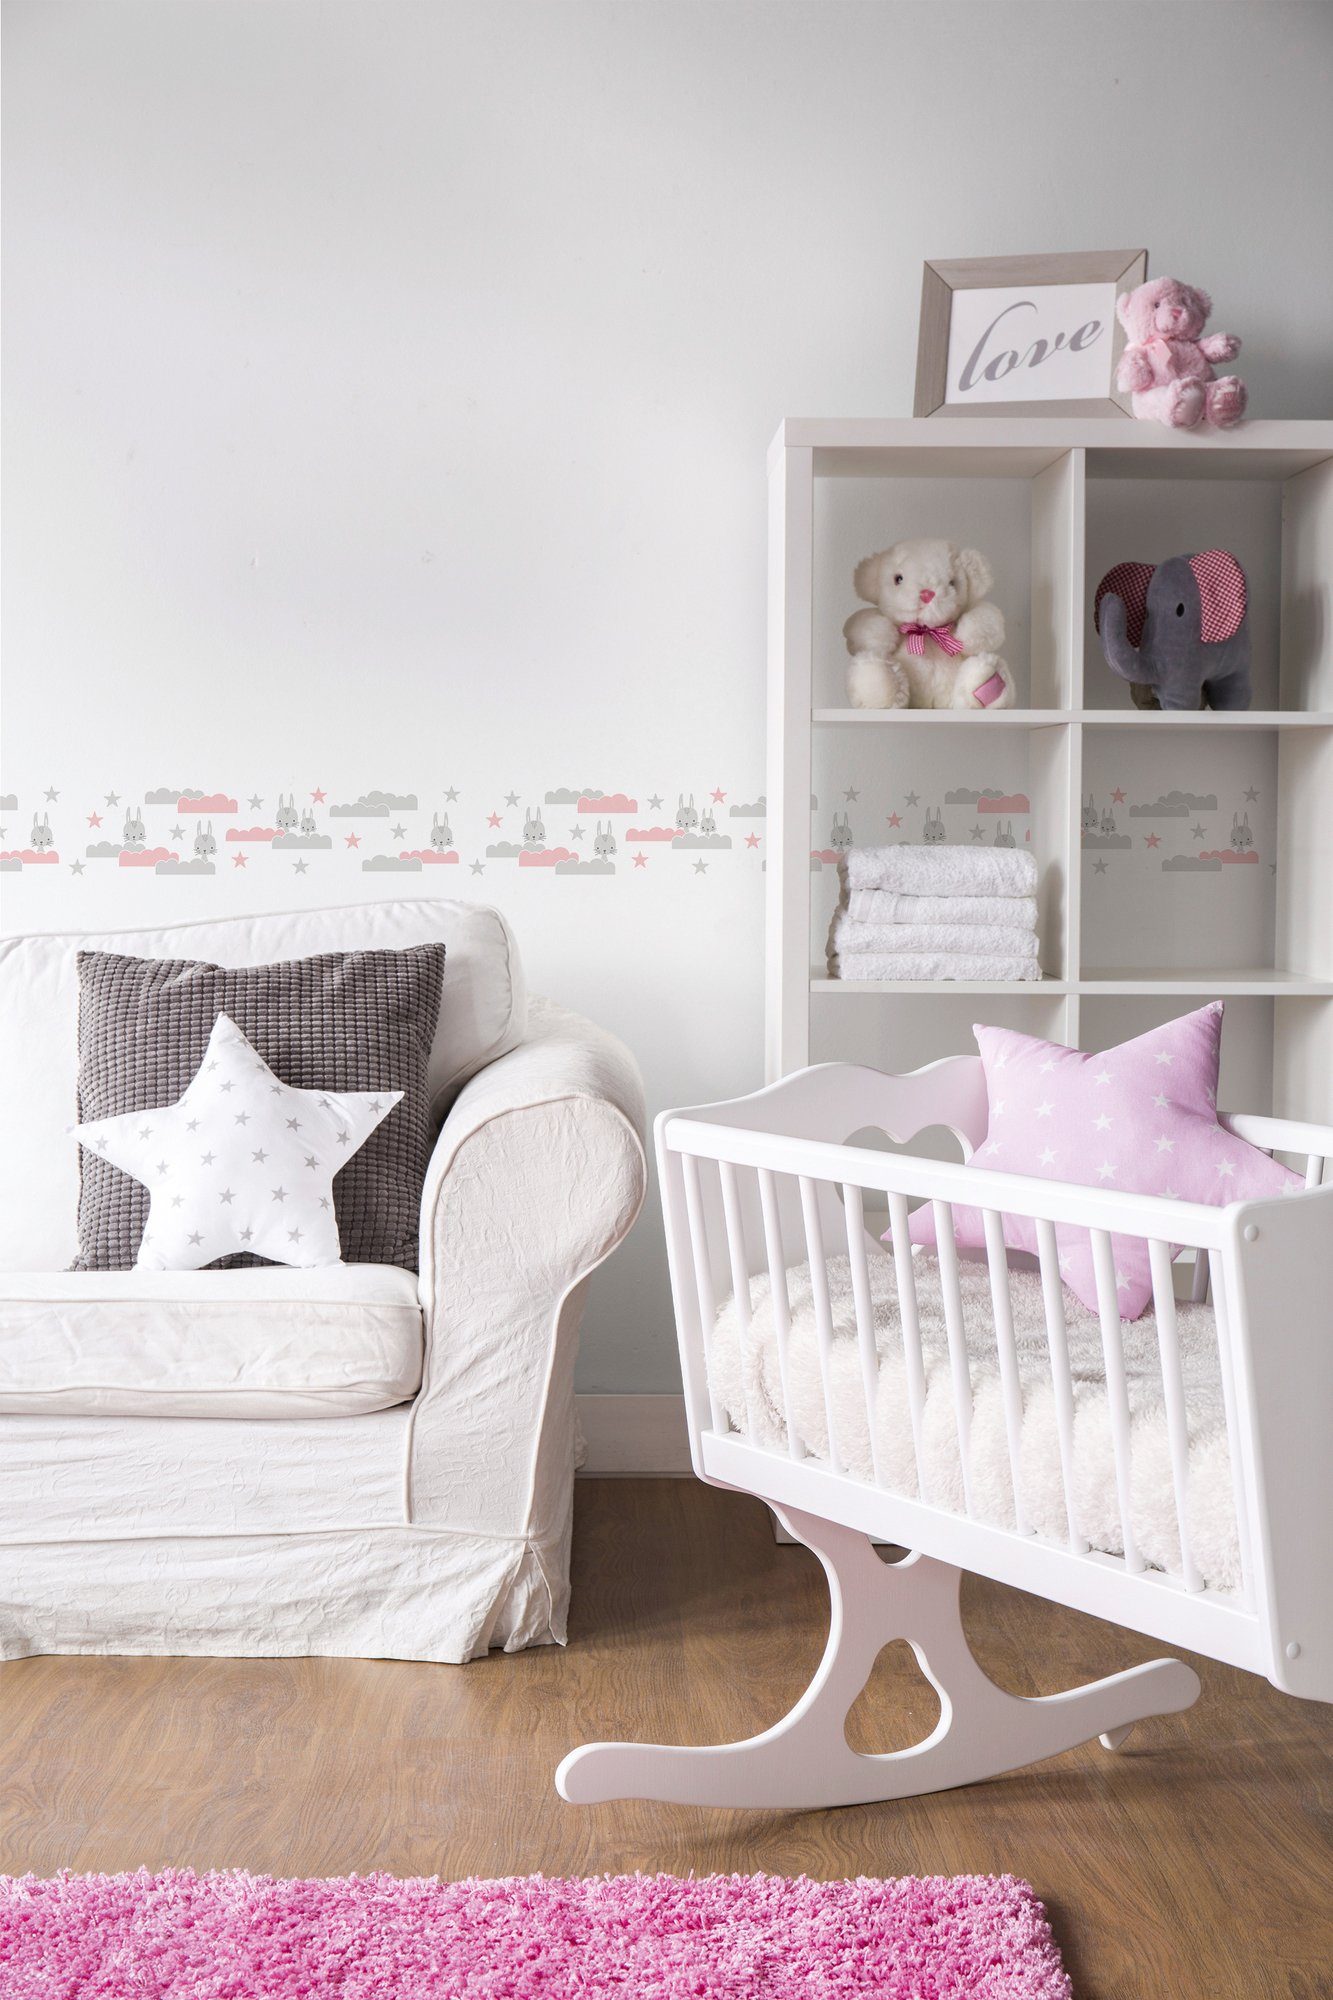 Création Rosa glatt, Tapete Bordüre Kinderzimmertapete Weiß Bunny, Baby- Kinderzimmer und Dreamy Grau A.S. für